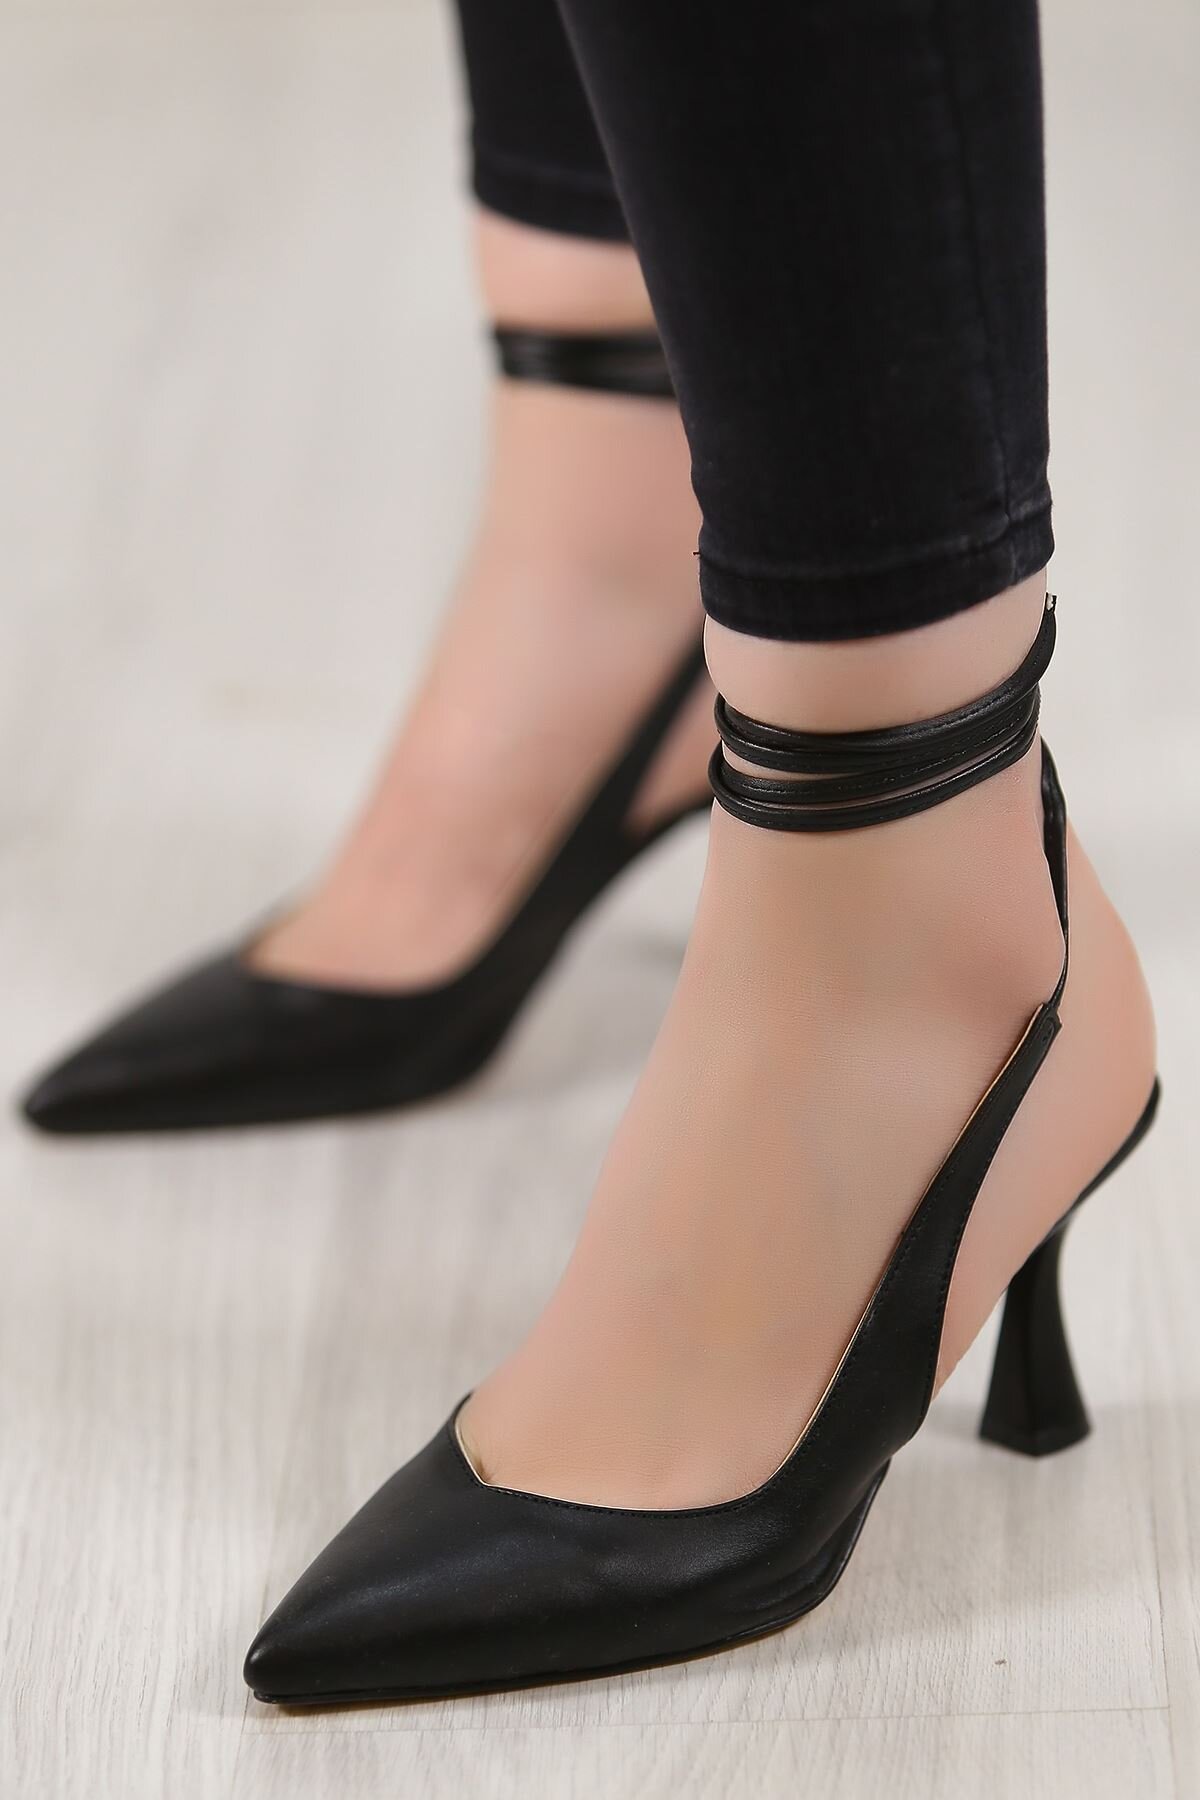 Remiss Siyah Deri 7cm Topuklu Ayakkabı